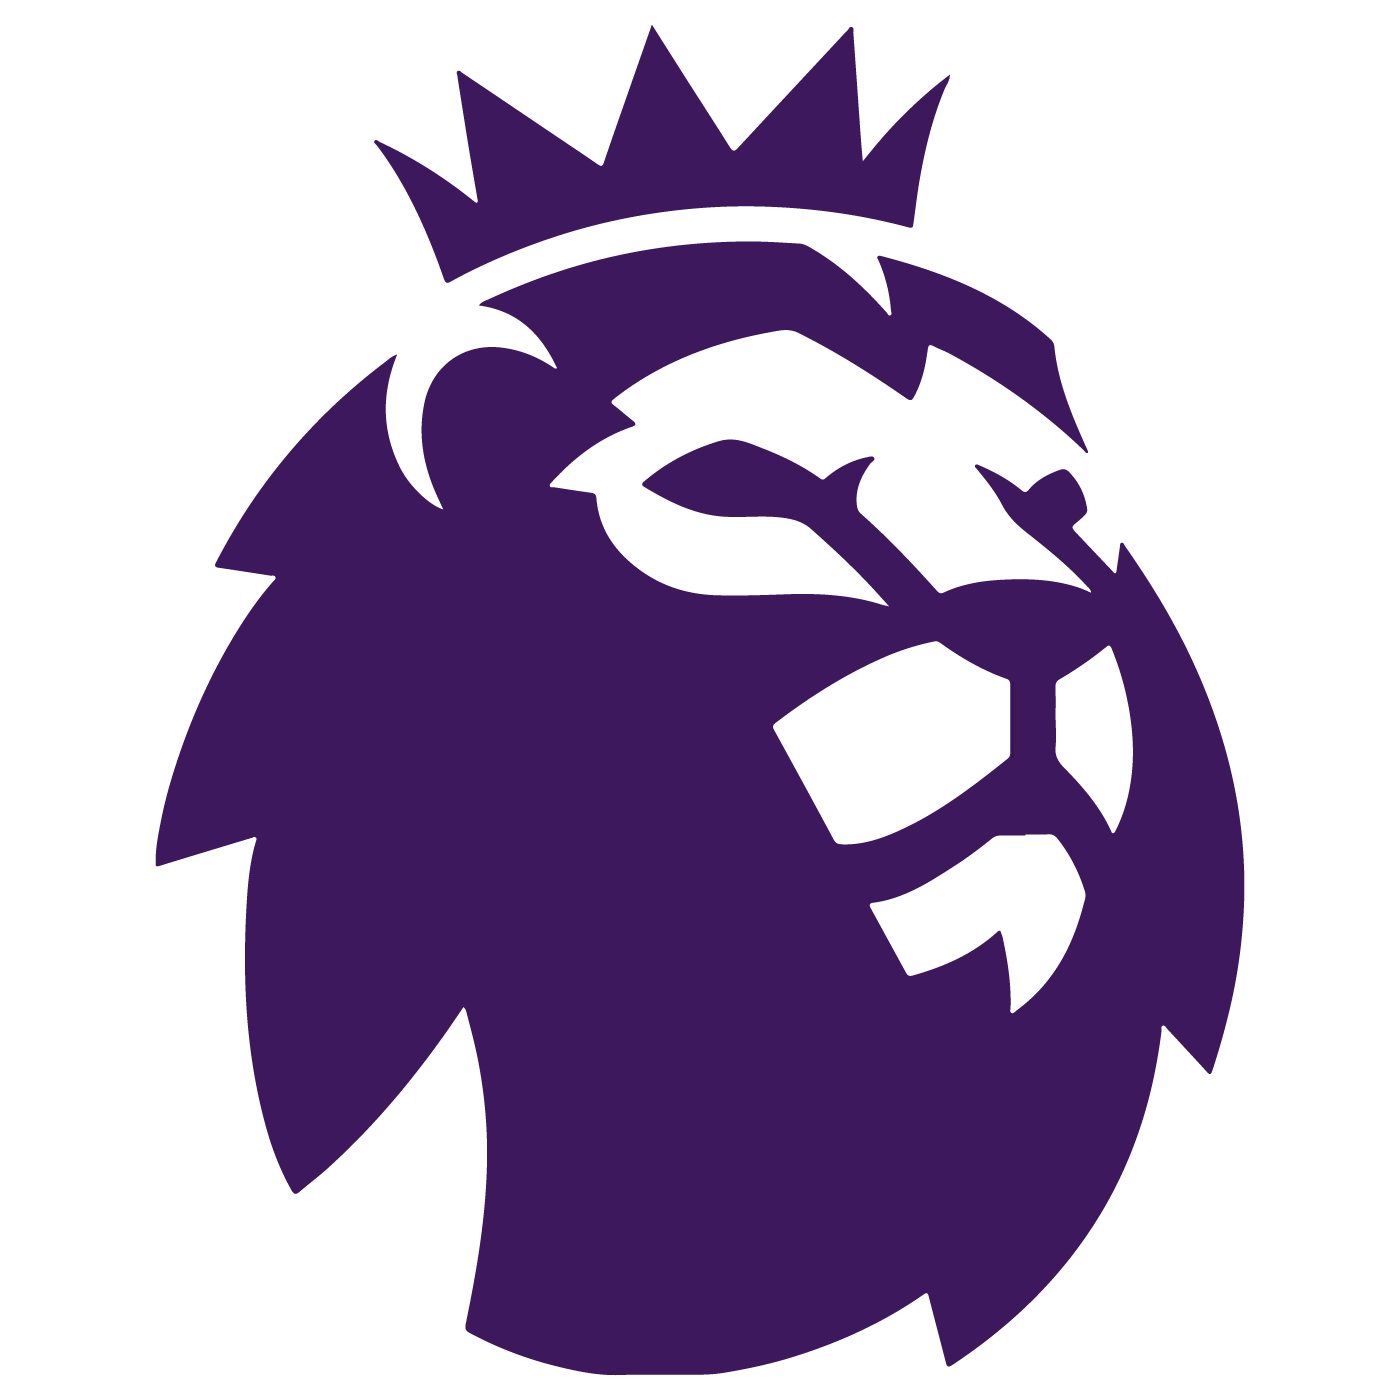 kisspng-201617-premier-league-english-football-league-l-lion-emoji-5b460f07222401.1477875515313180231399